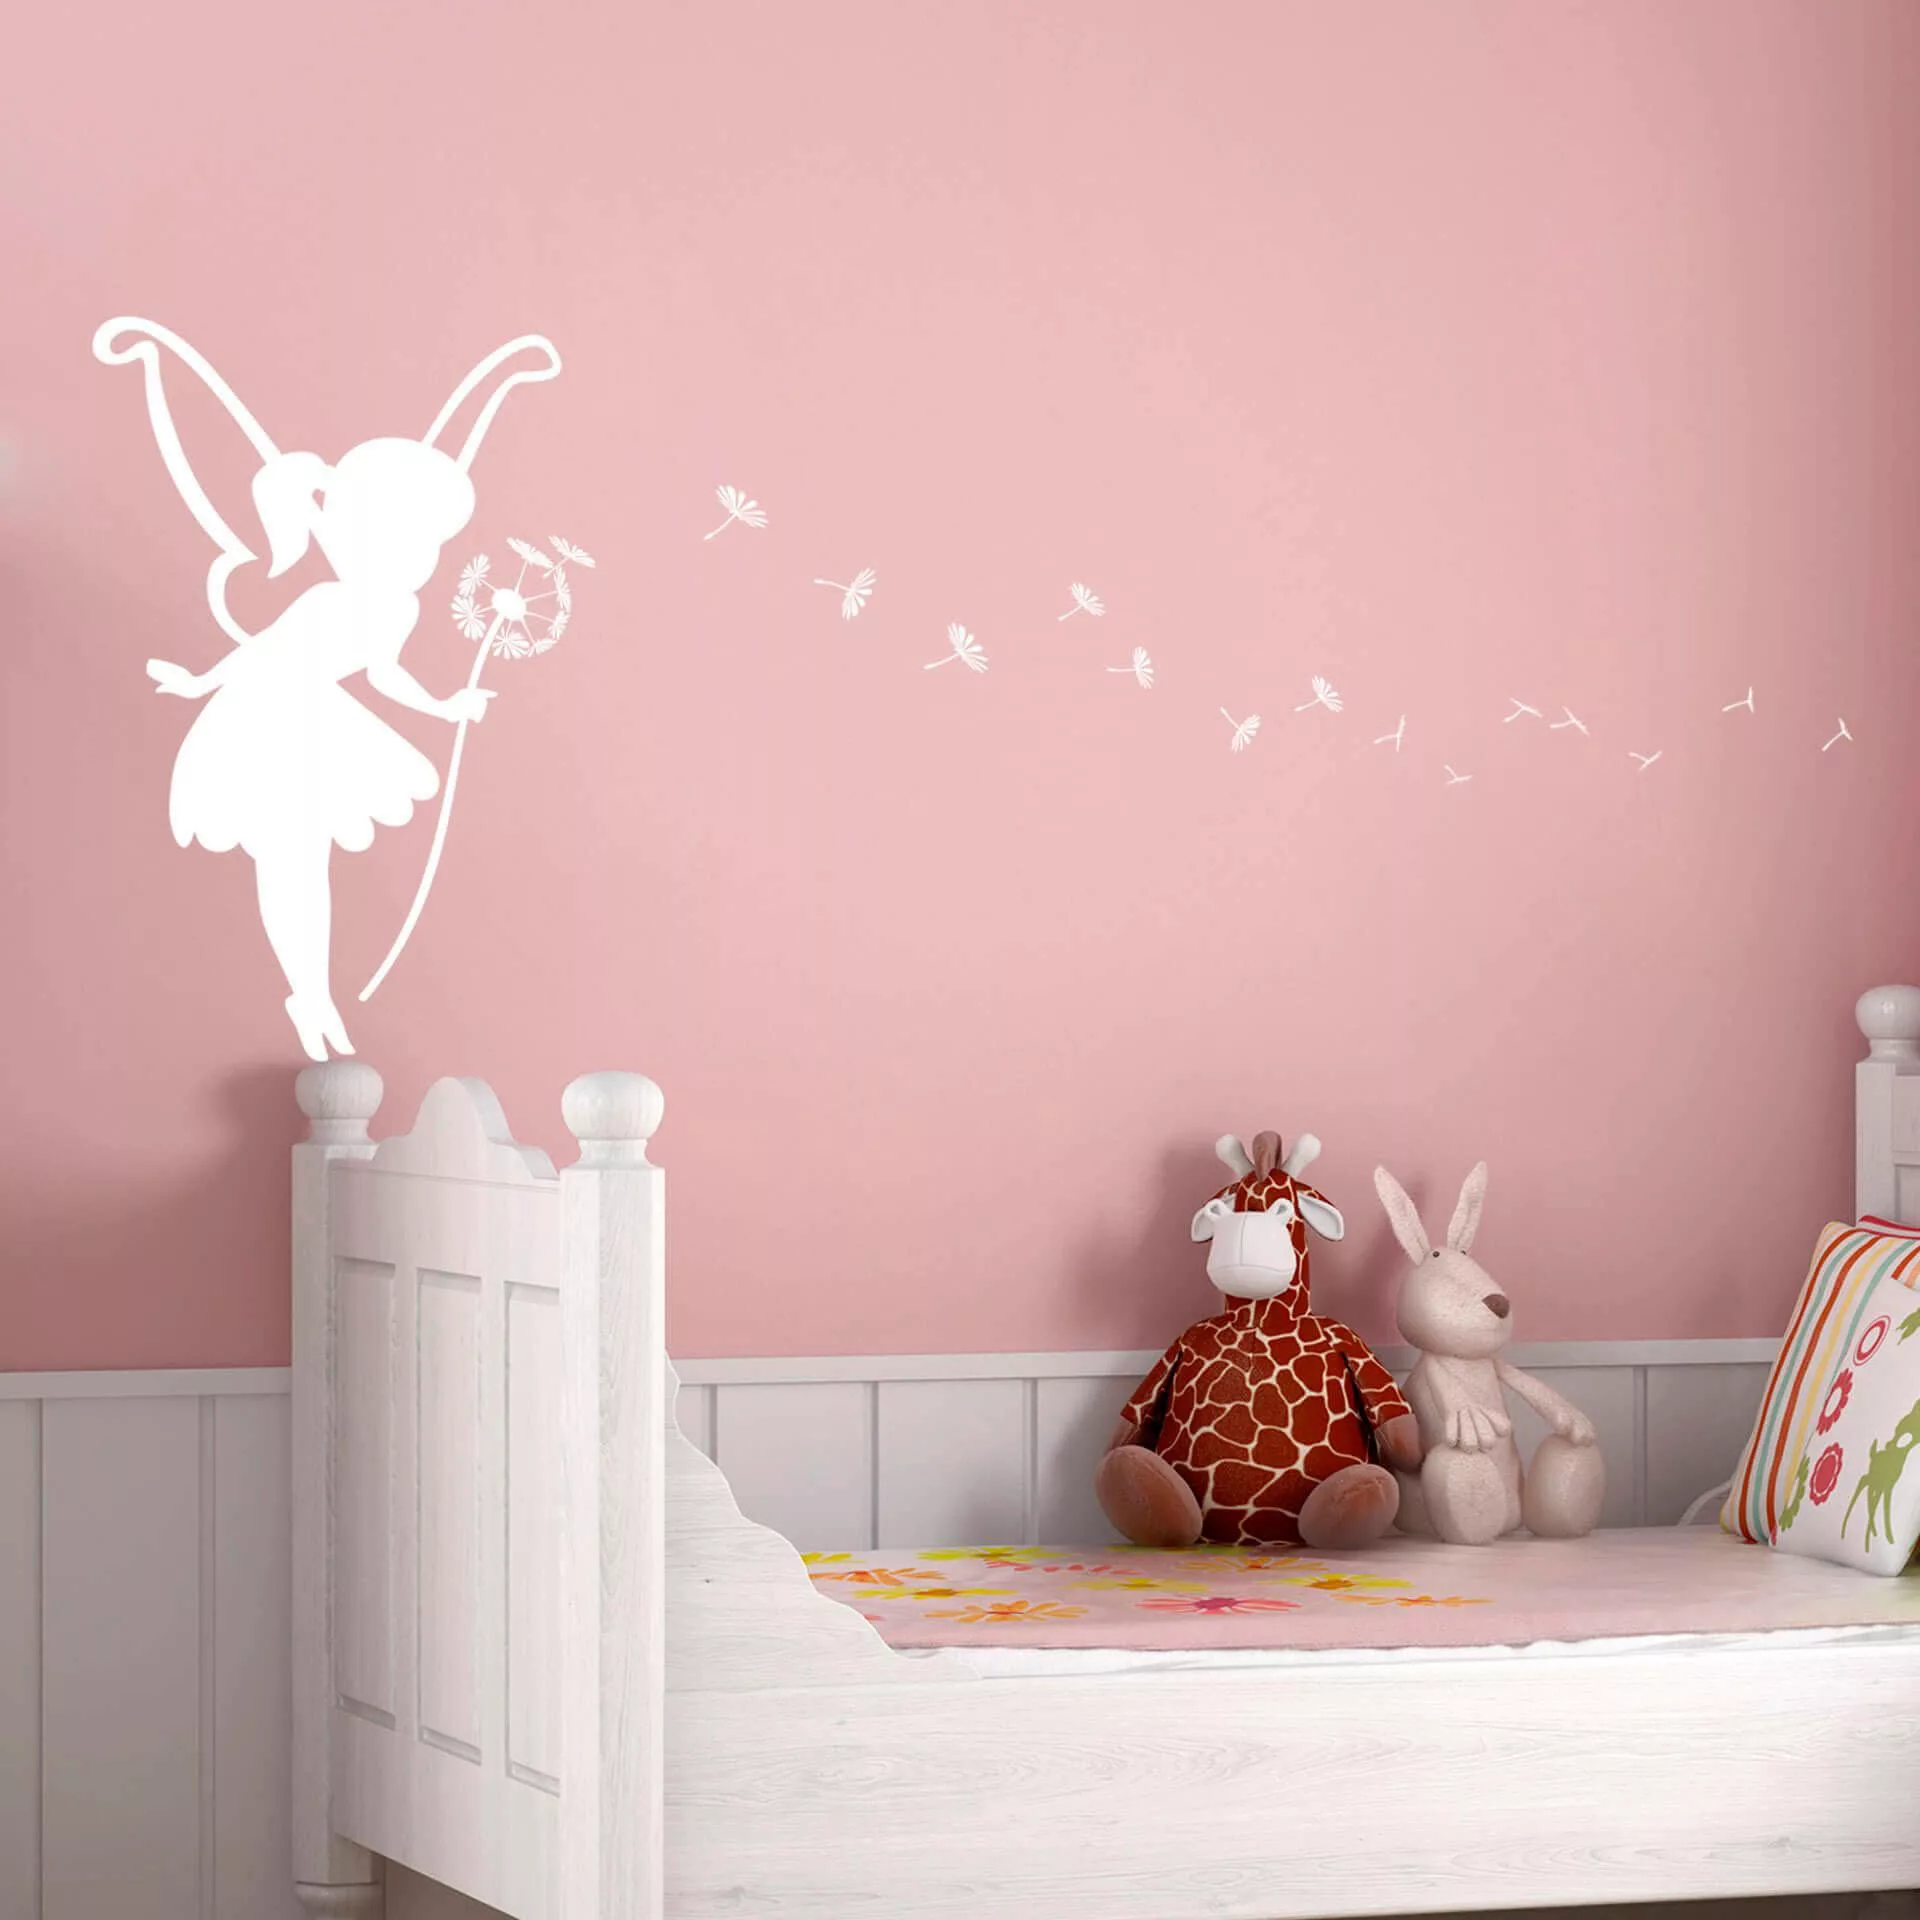 Wall-Art Wandtattoo "Wünsch dir was Pusteblumen Fee", selbstklebend, entfer günstig online kaufen